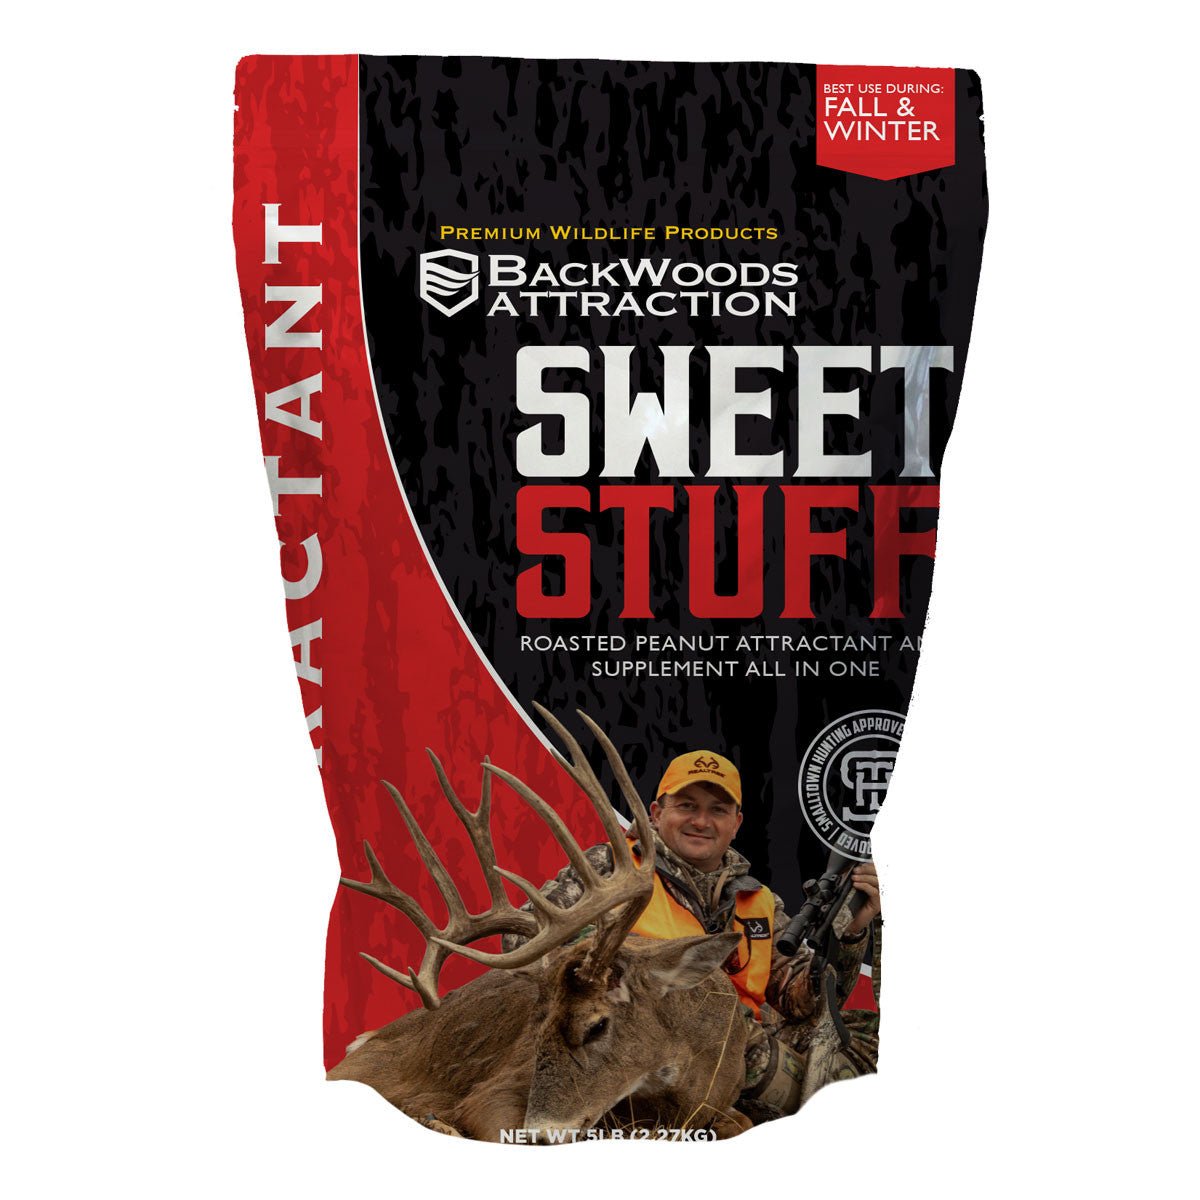 Sweet Stuff Deer Attractant and Supplement 5lb